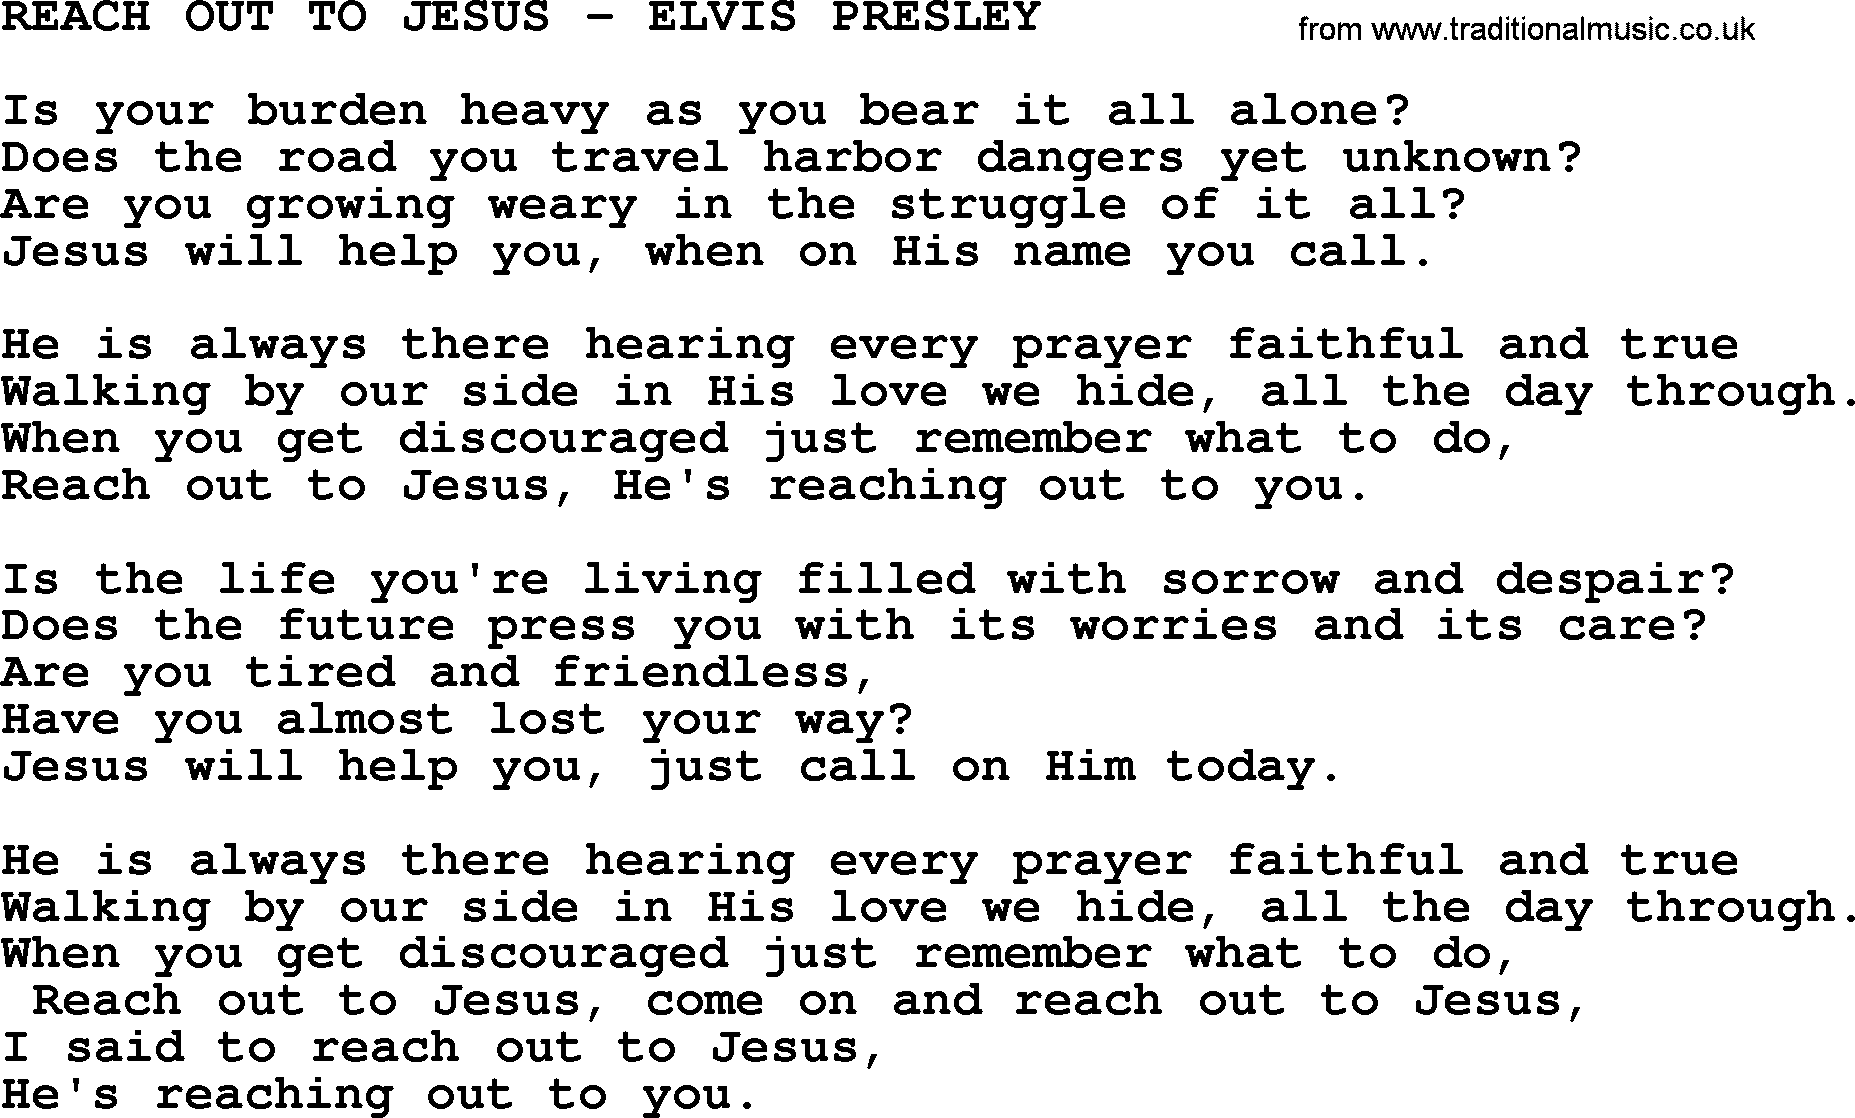 Elvis Presley song: Reach Out To Jesus-Elvis Presley-.txt lyrics and chords